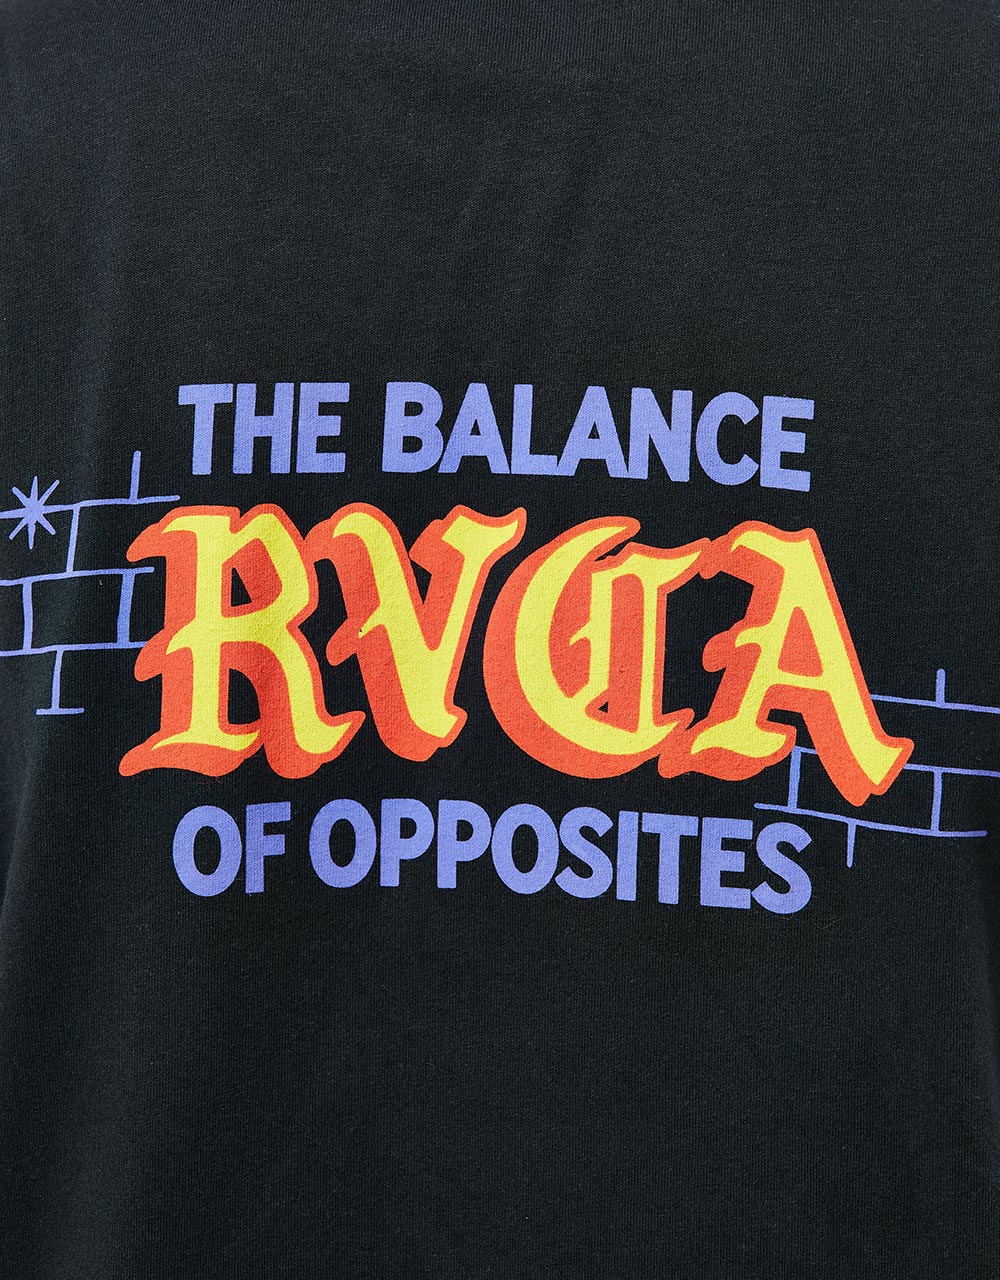 RVCA Del Toro Organic T-Shirt - Black